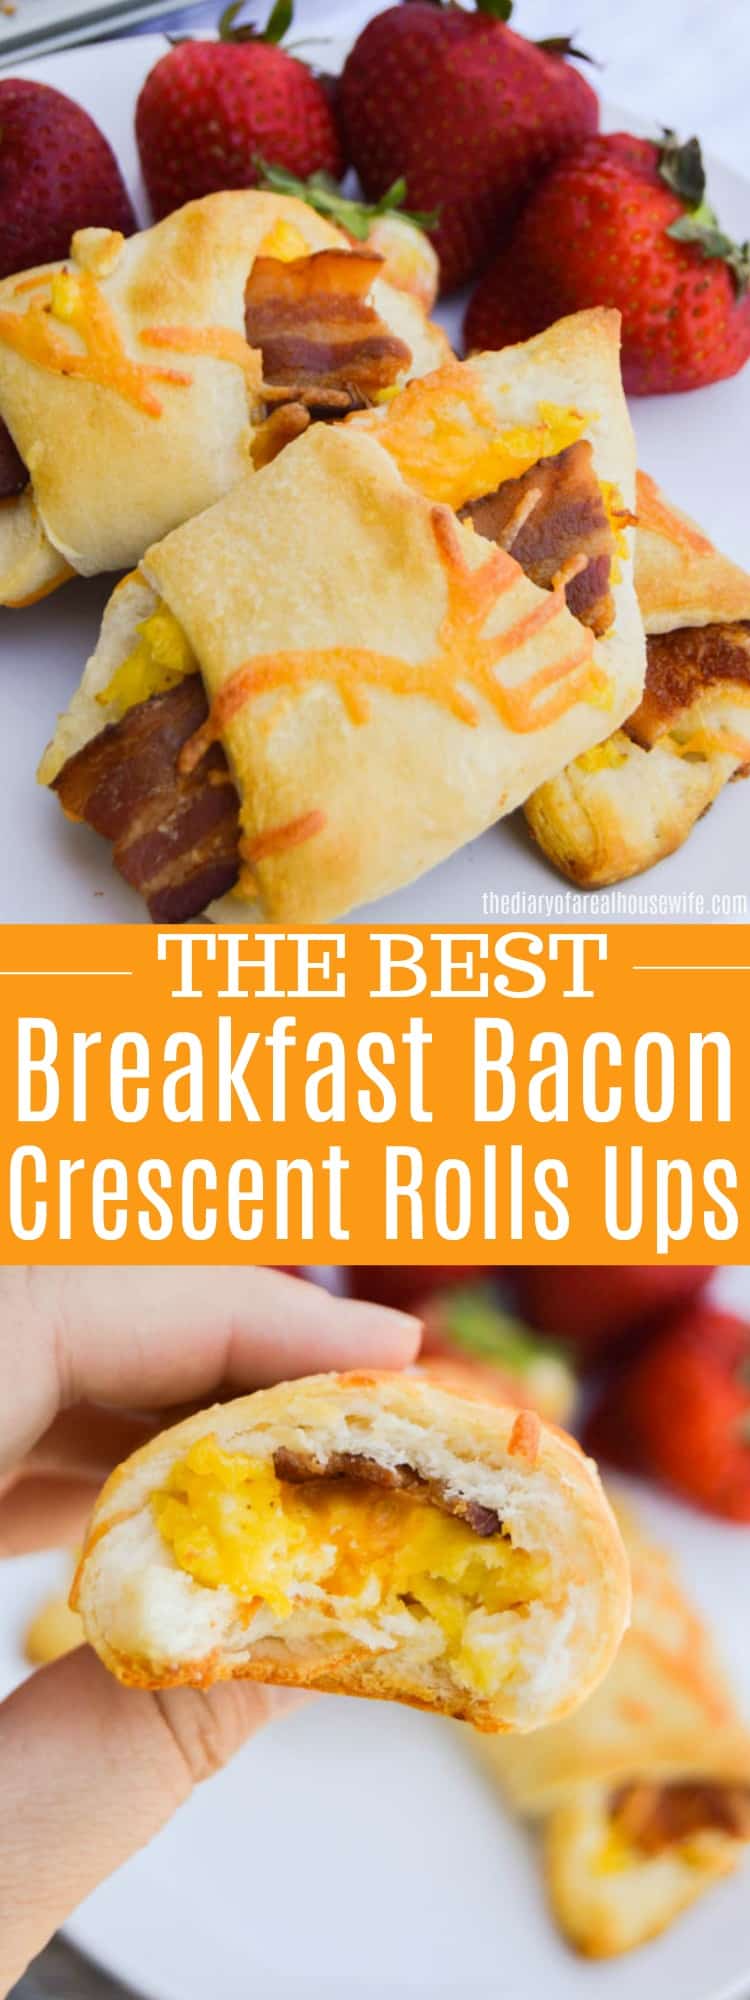 Breakfast Bacon Crescent Rolls Ups